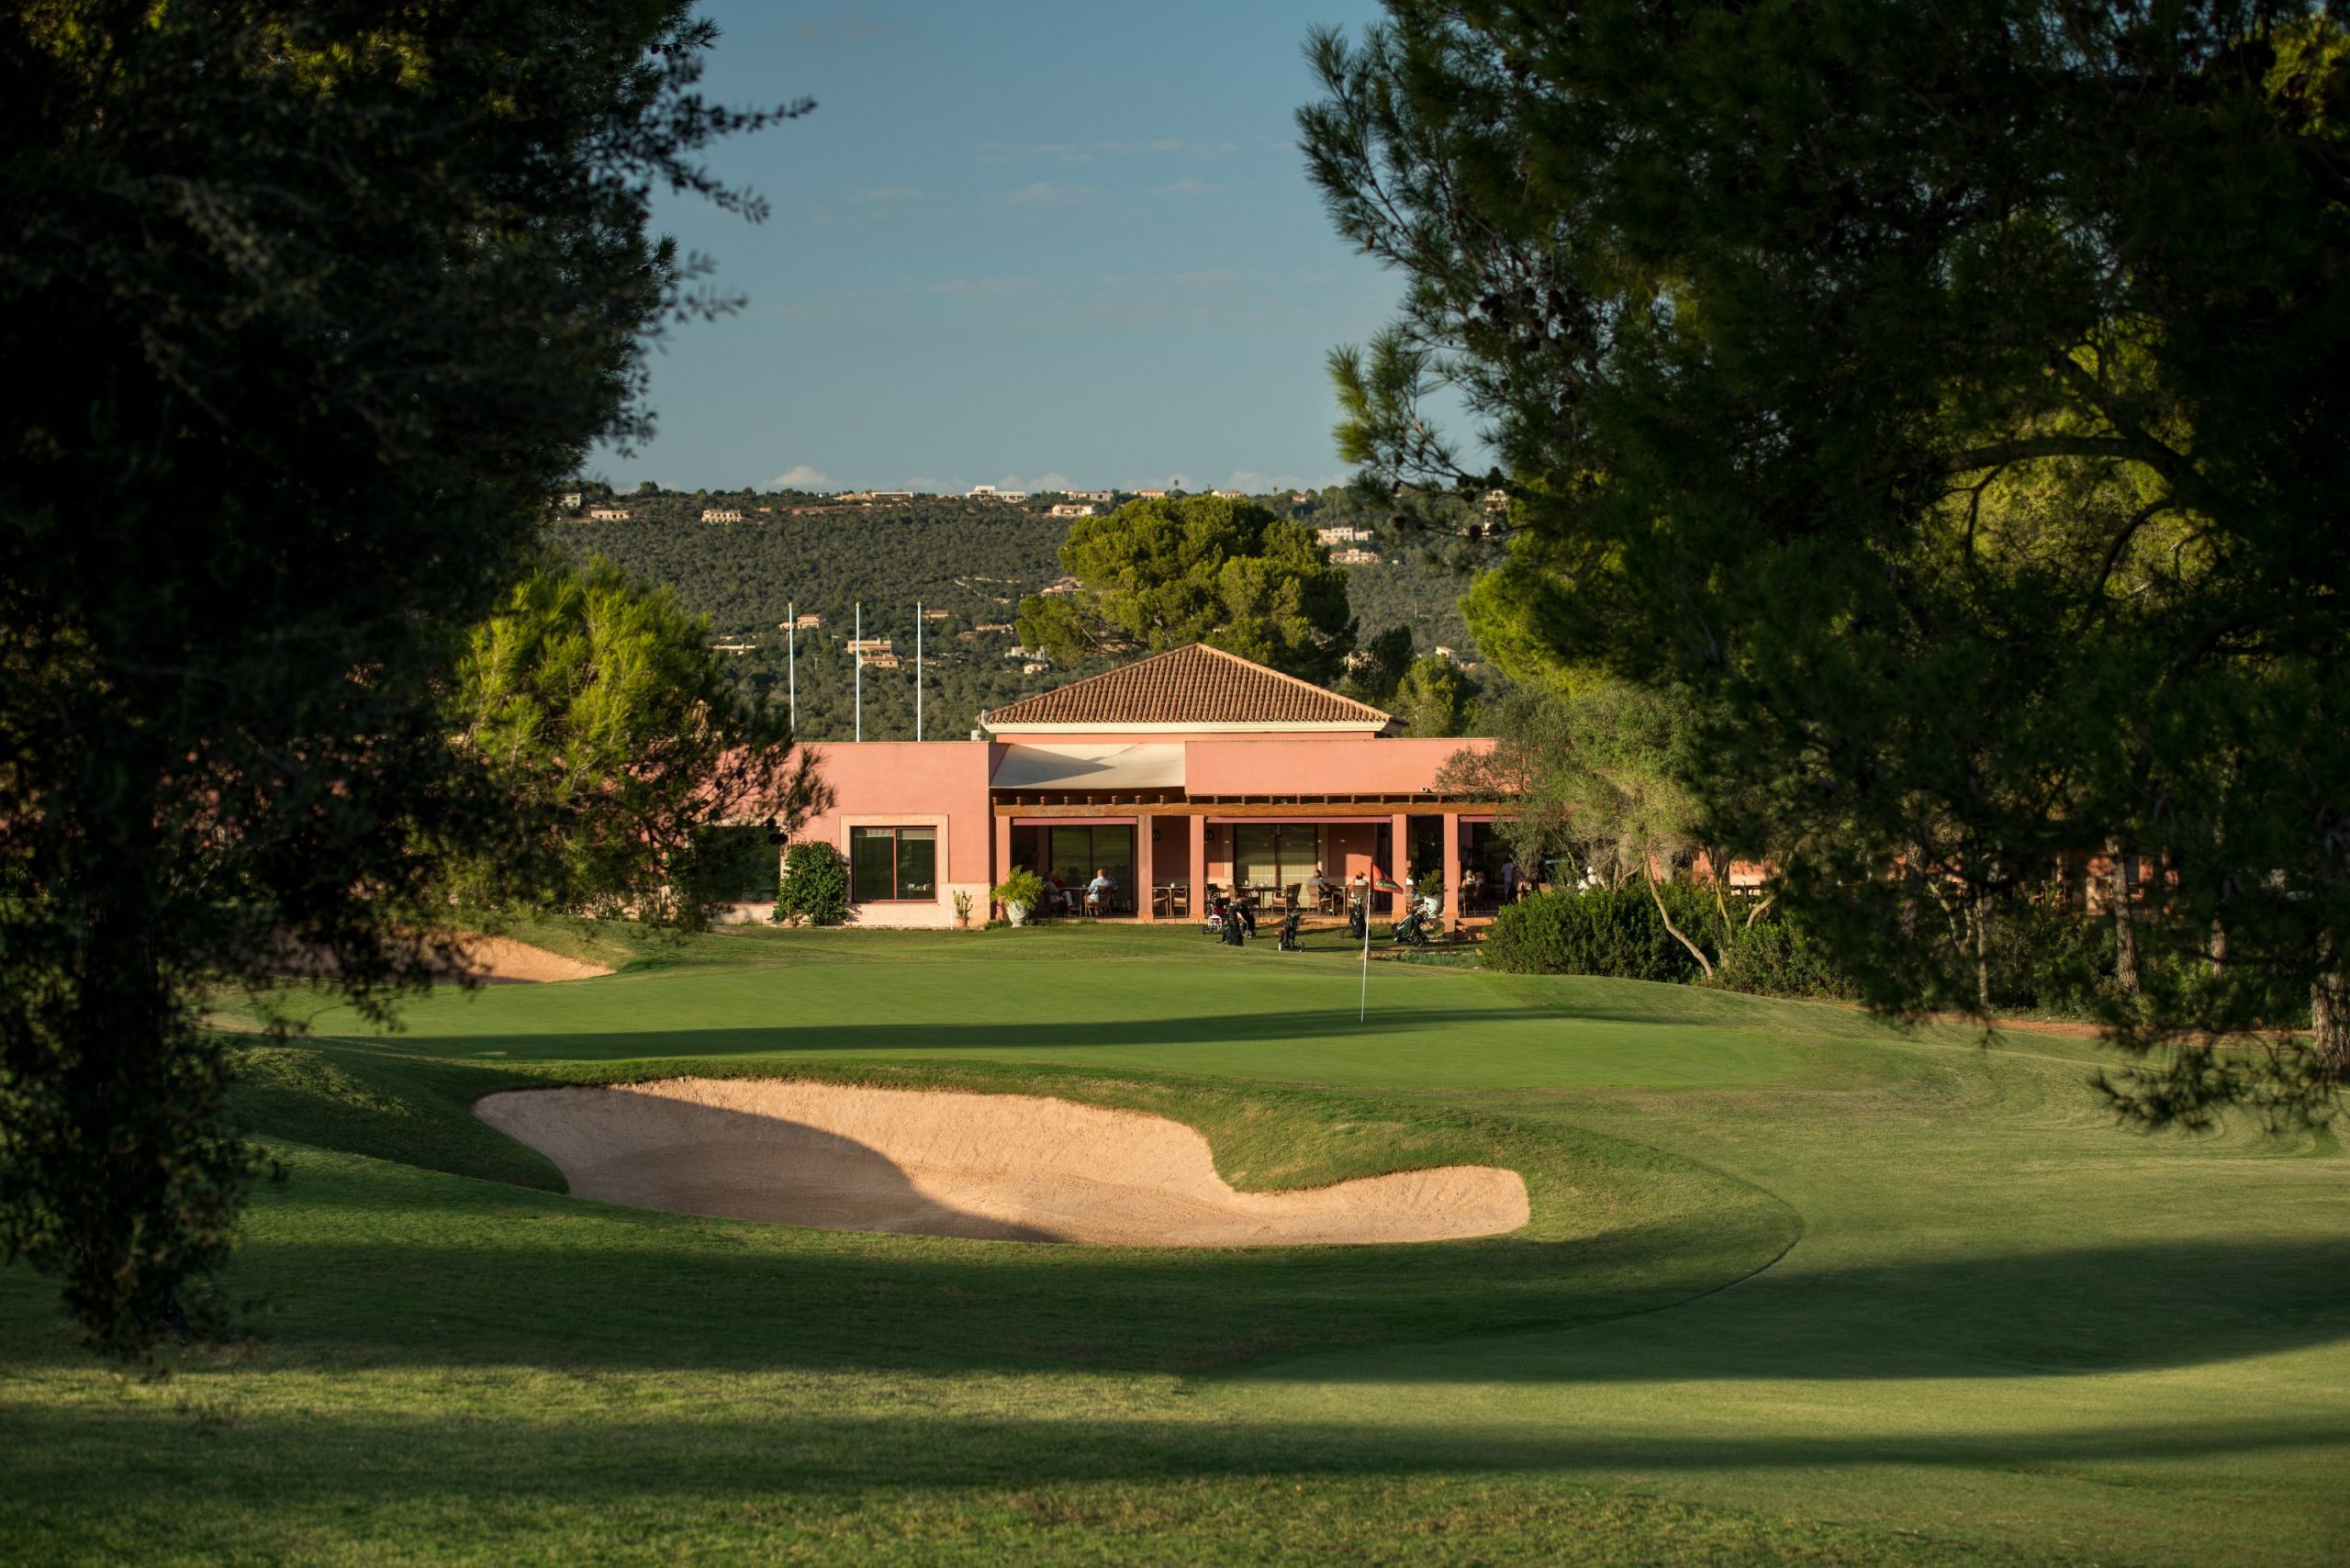 The 18th hole at T-Golf, Palma, Mallorca